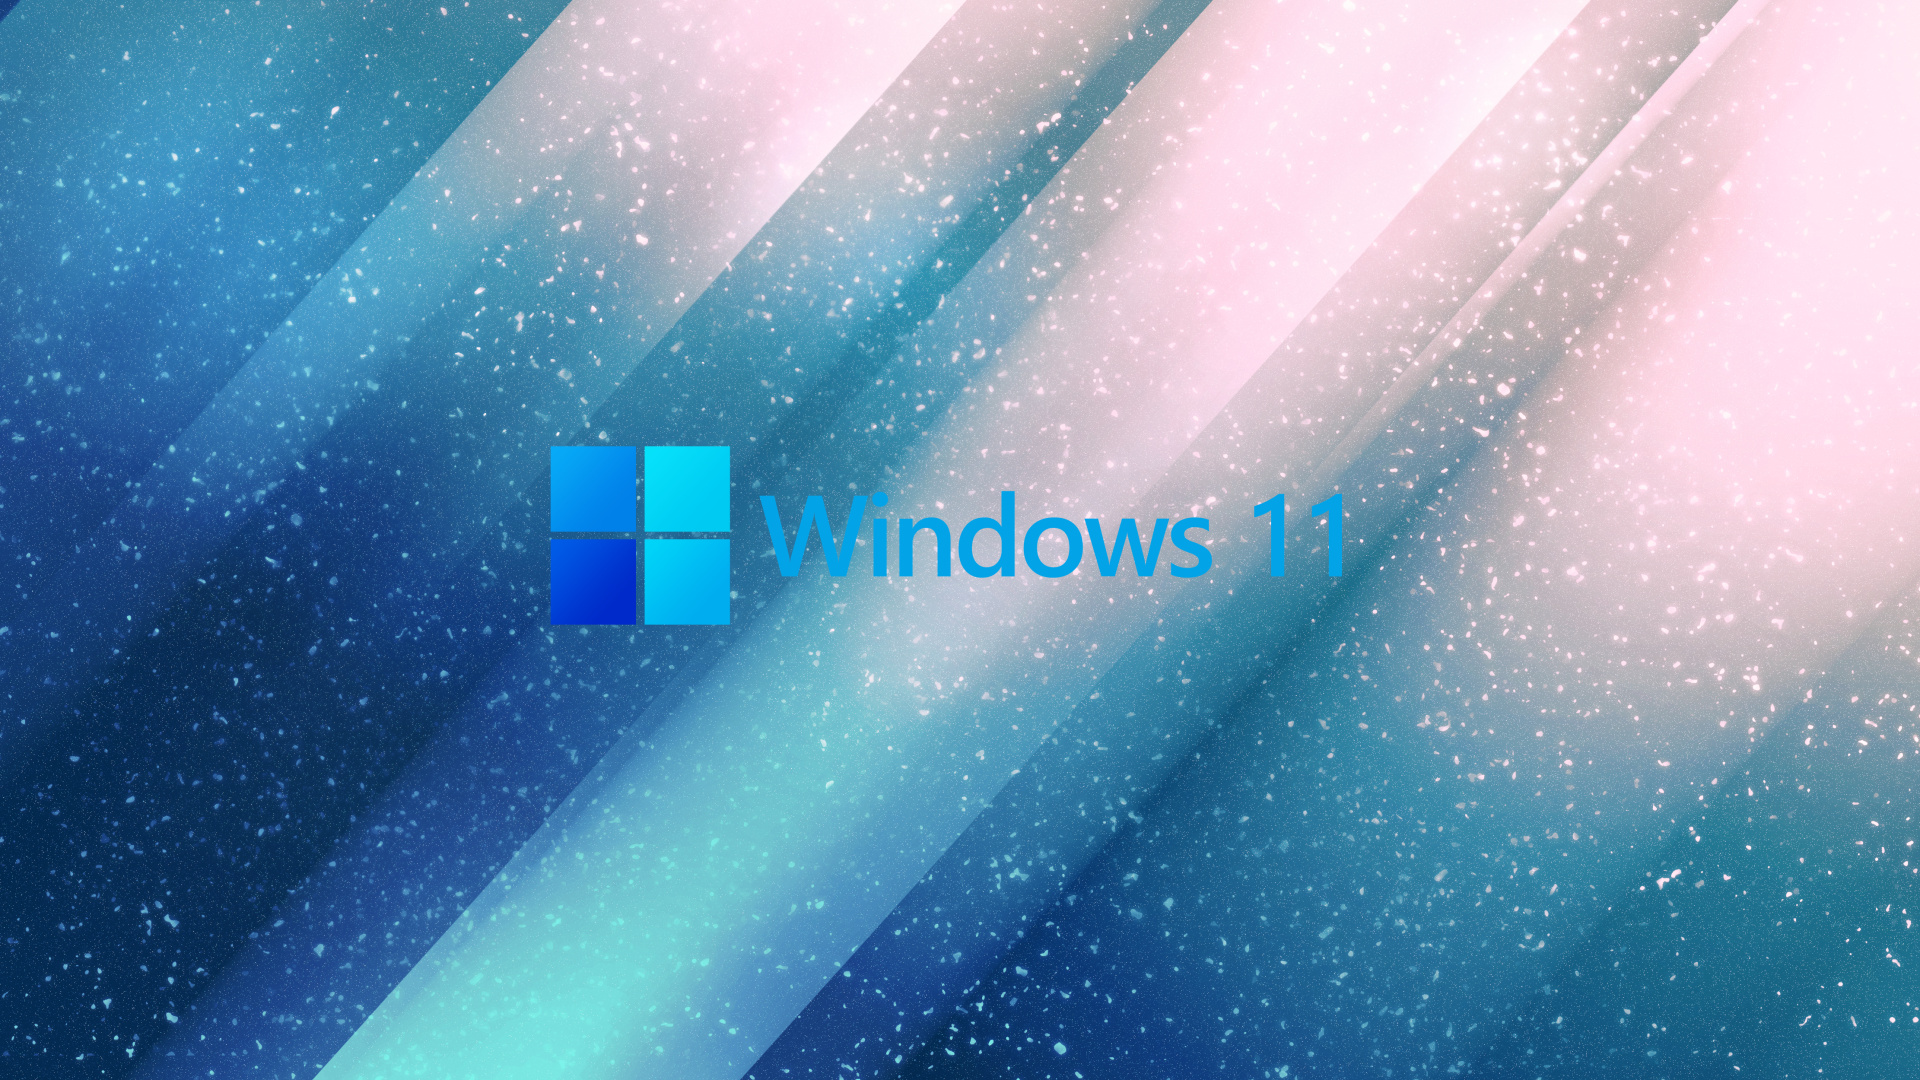 microsoft windows 11 full version free download